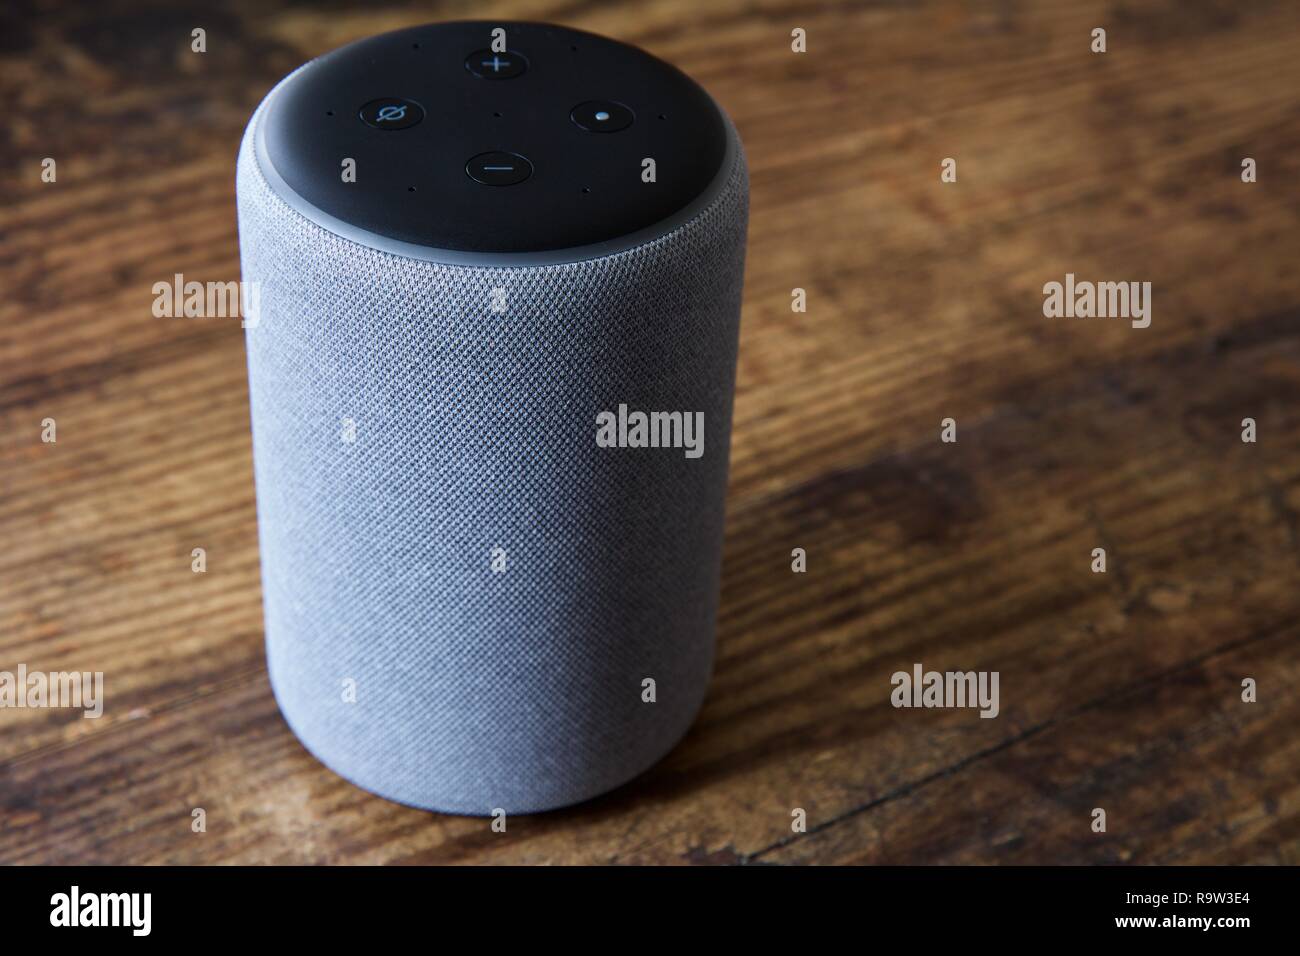 2nd generation Echo Plus smart home hub with Alexa Stock Photo - Alamy